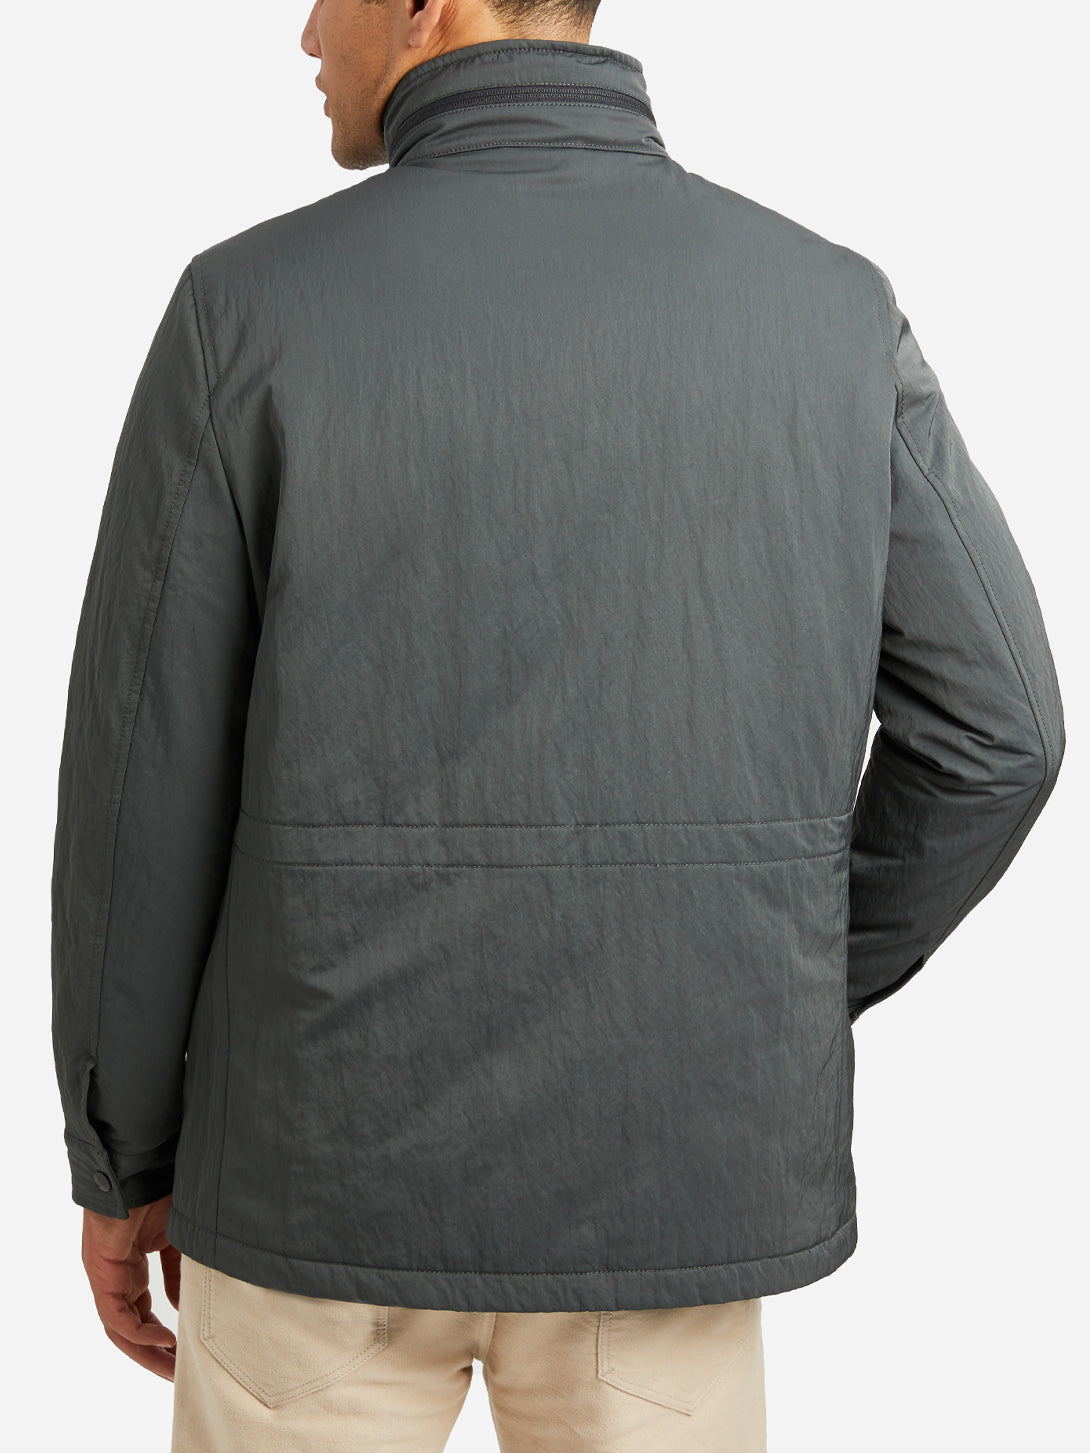 DARK GREEN jackets for men m-65 field jacket ons clothing